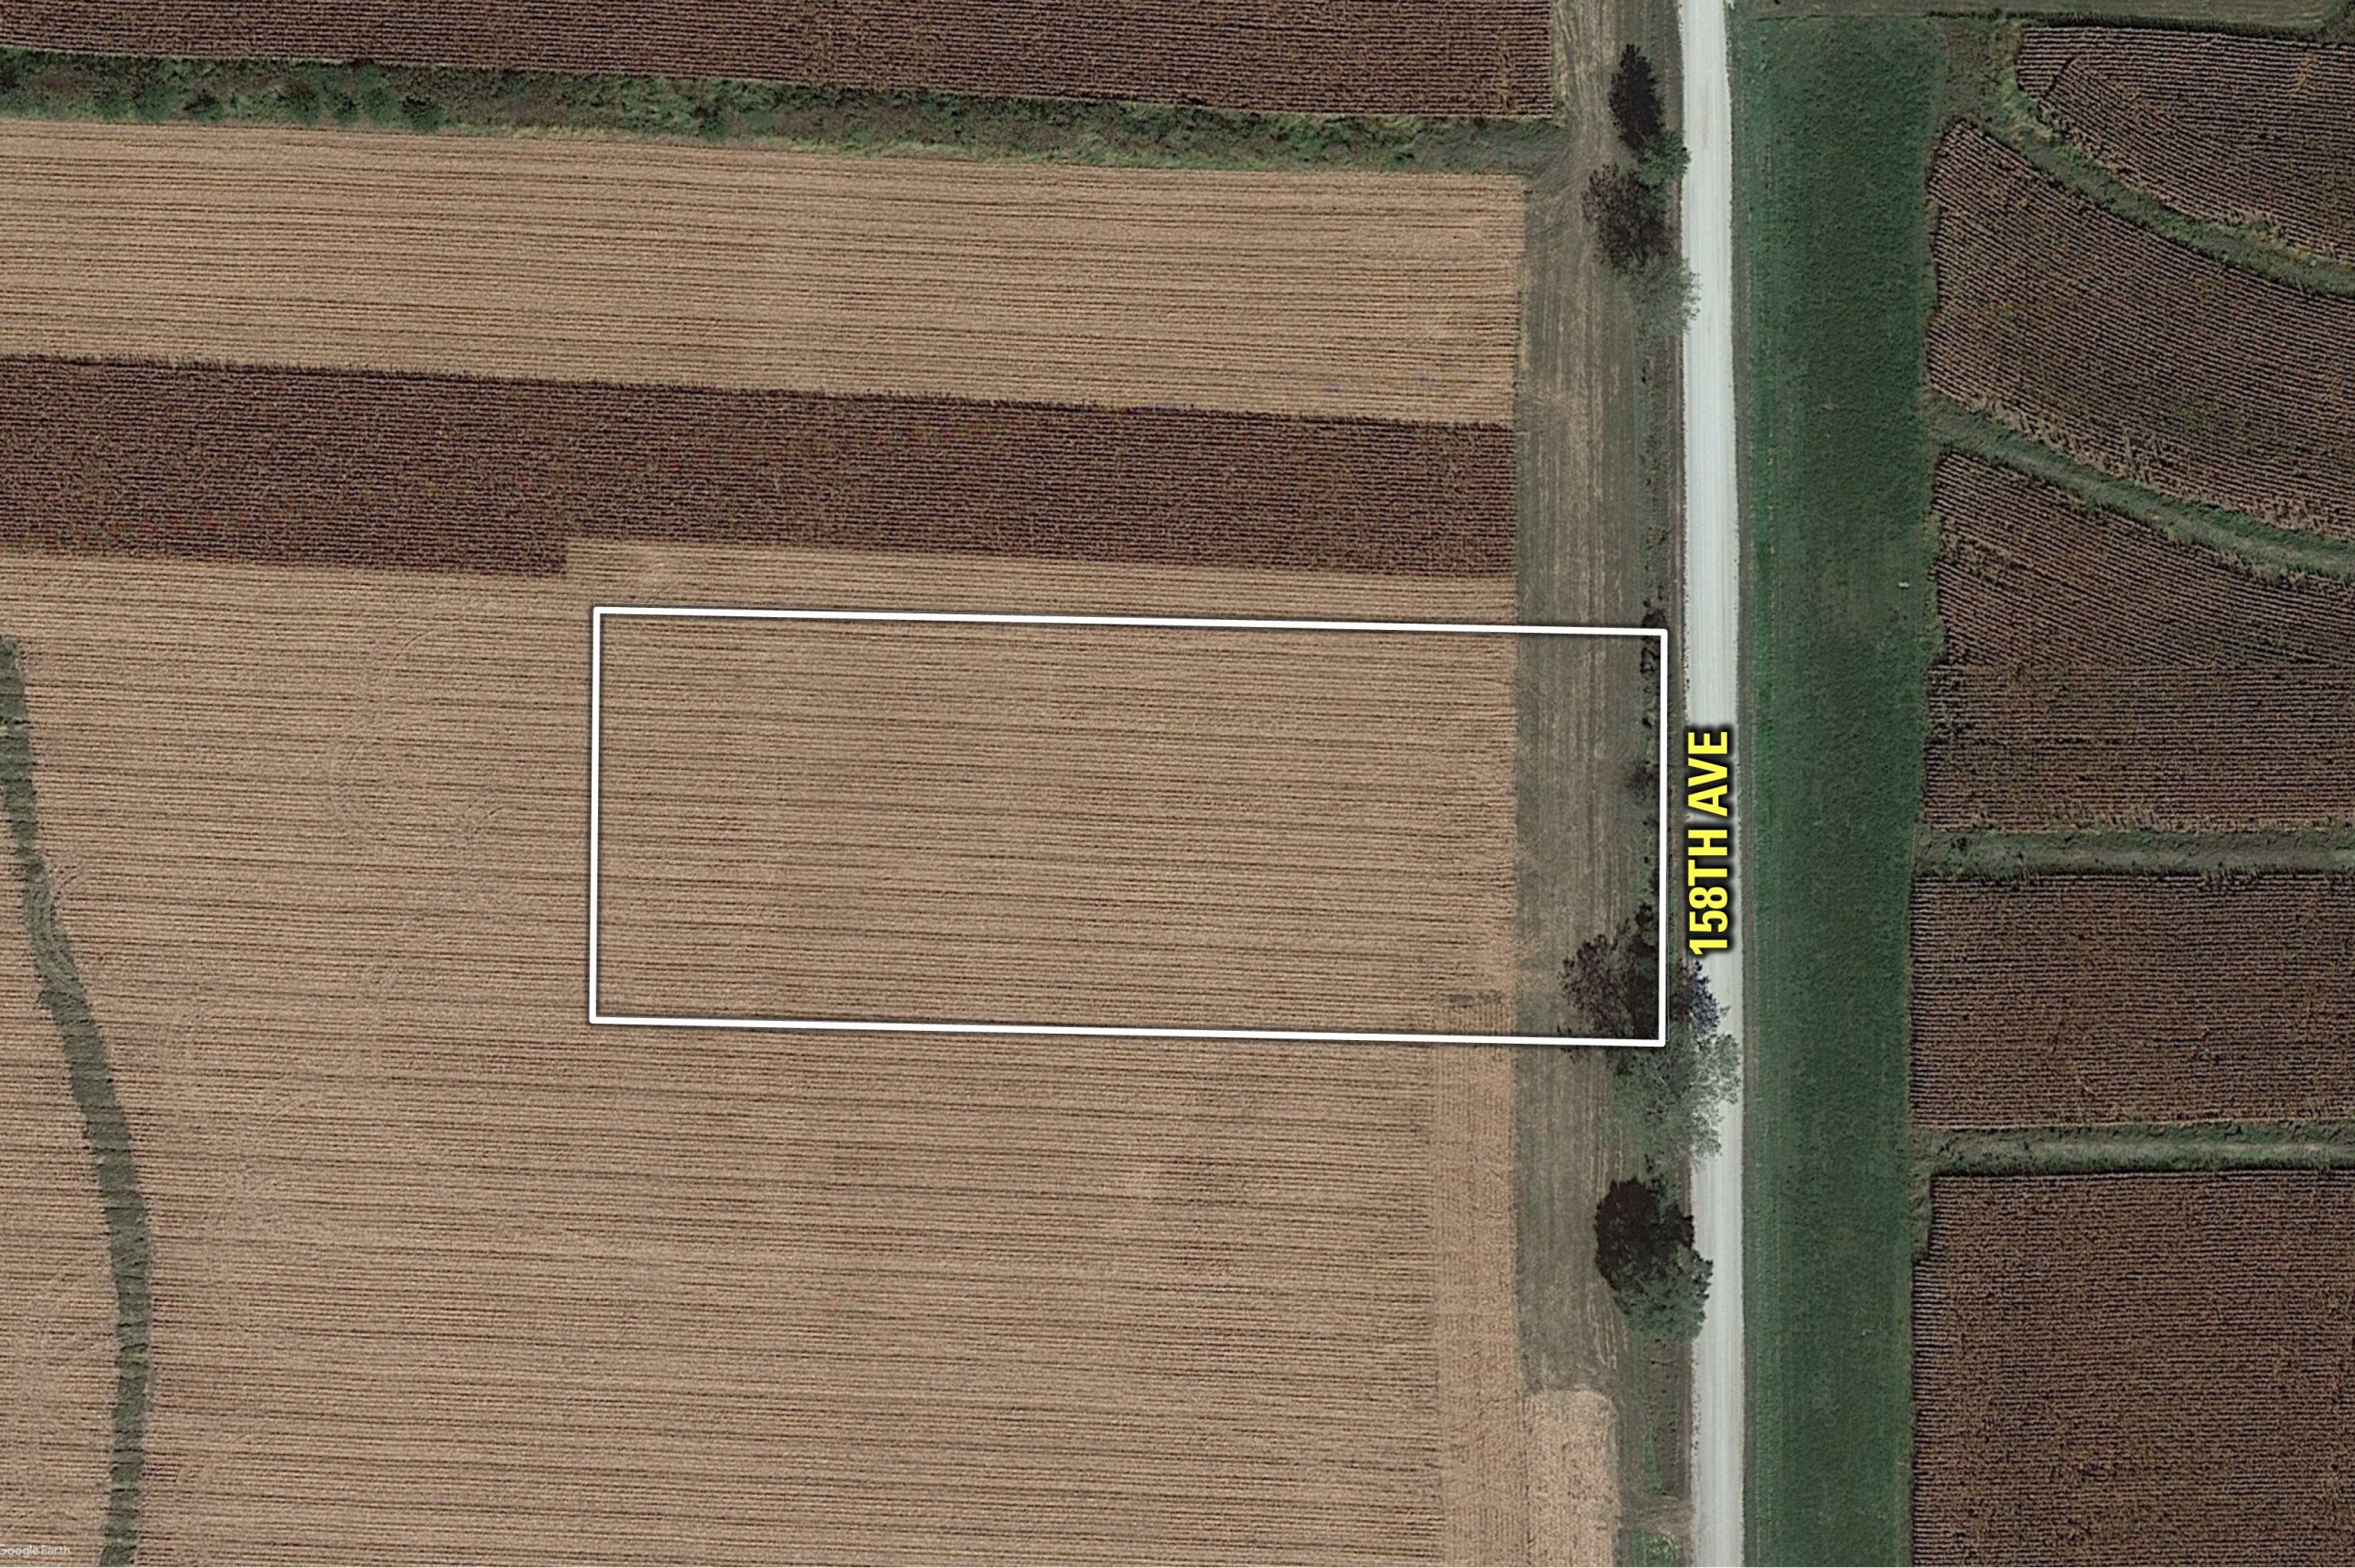 land-warren-county-iowa-2-acres-listing-number-16415-Moorman Middle Lot-3.jpg